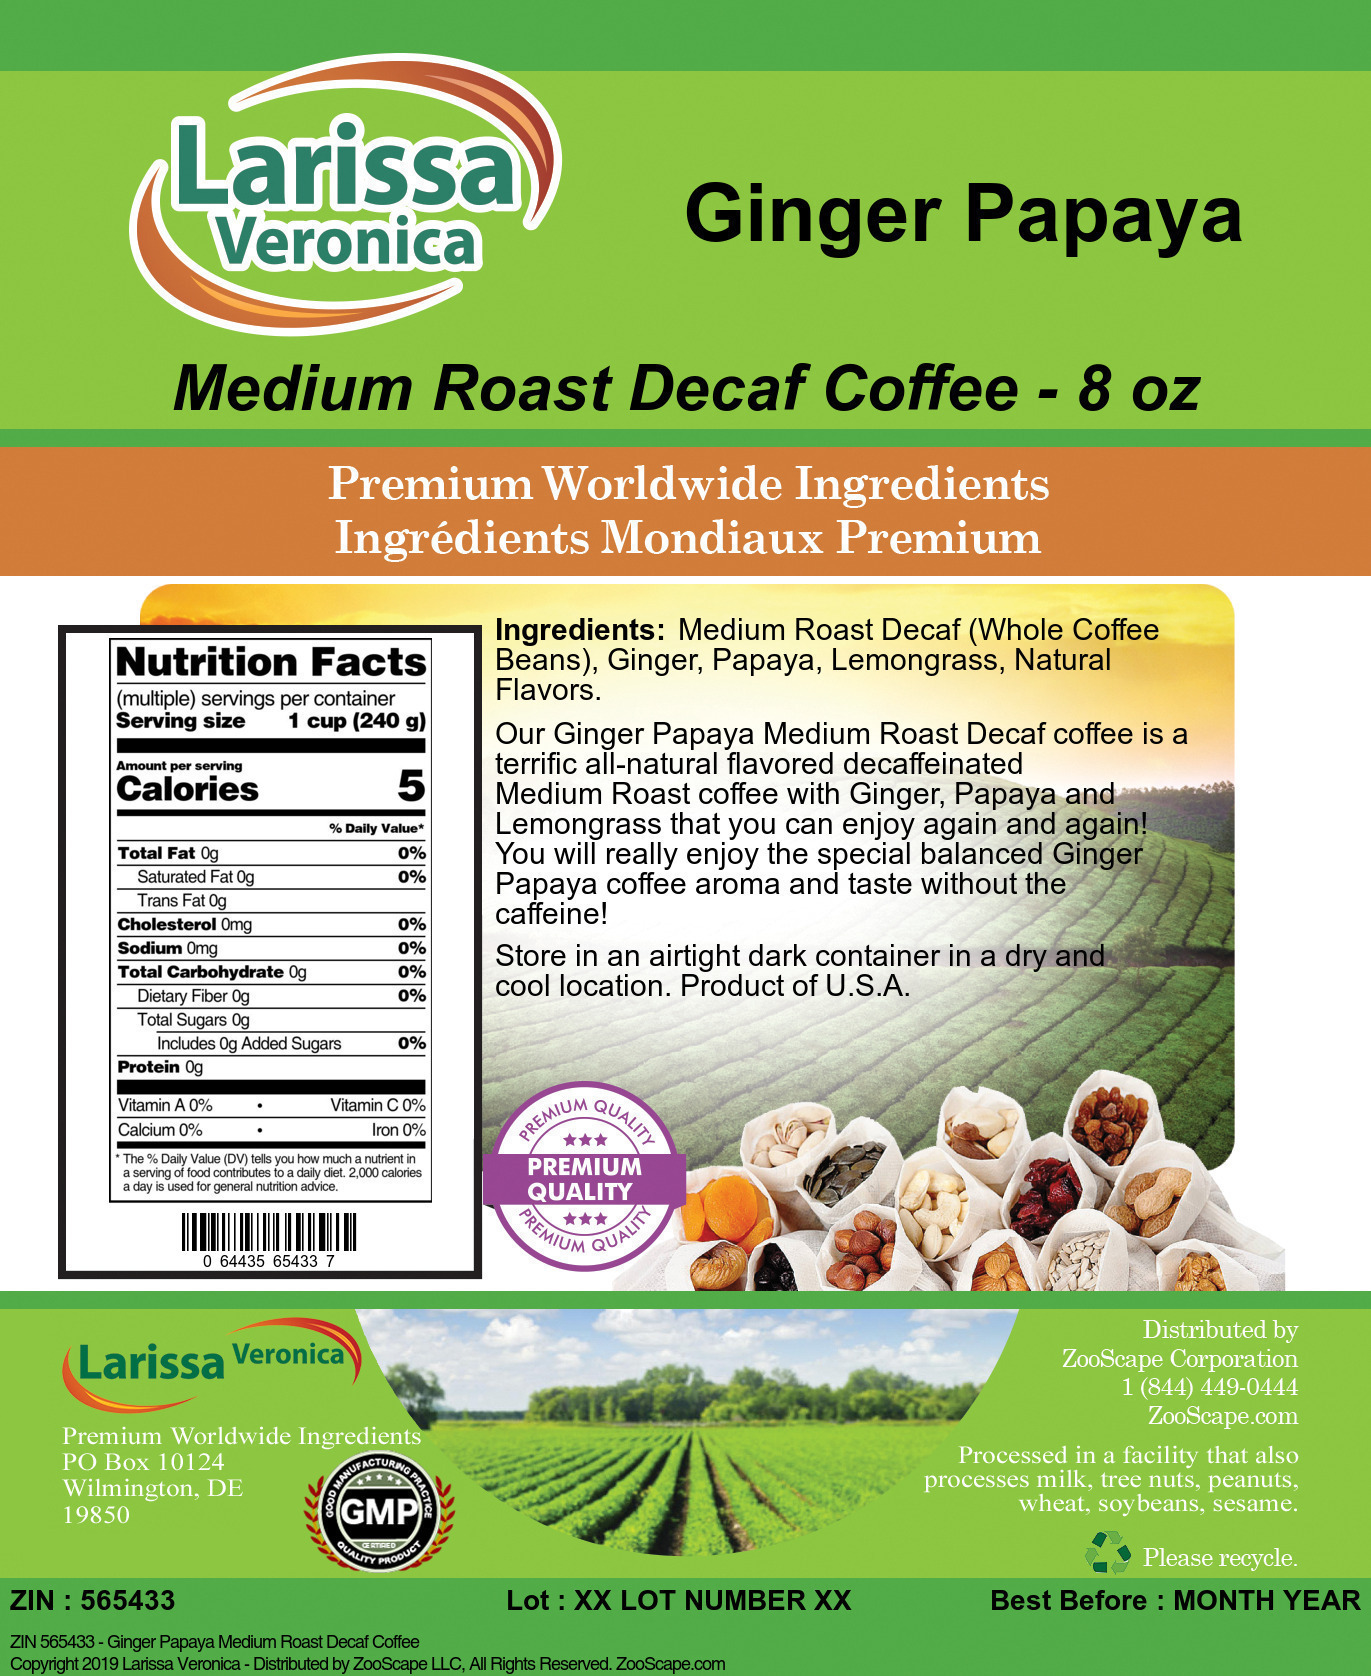 Ginger Papaya Medium Roast Decaf Coffee - Label